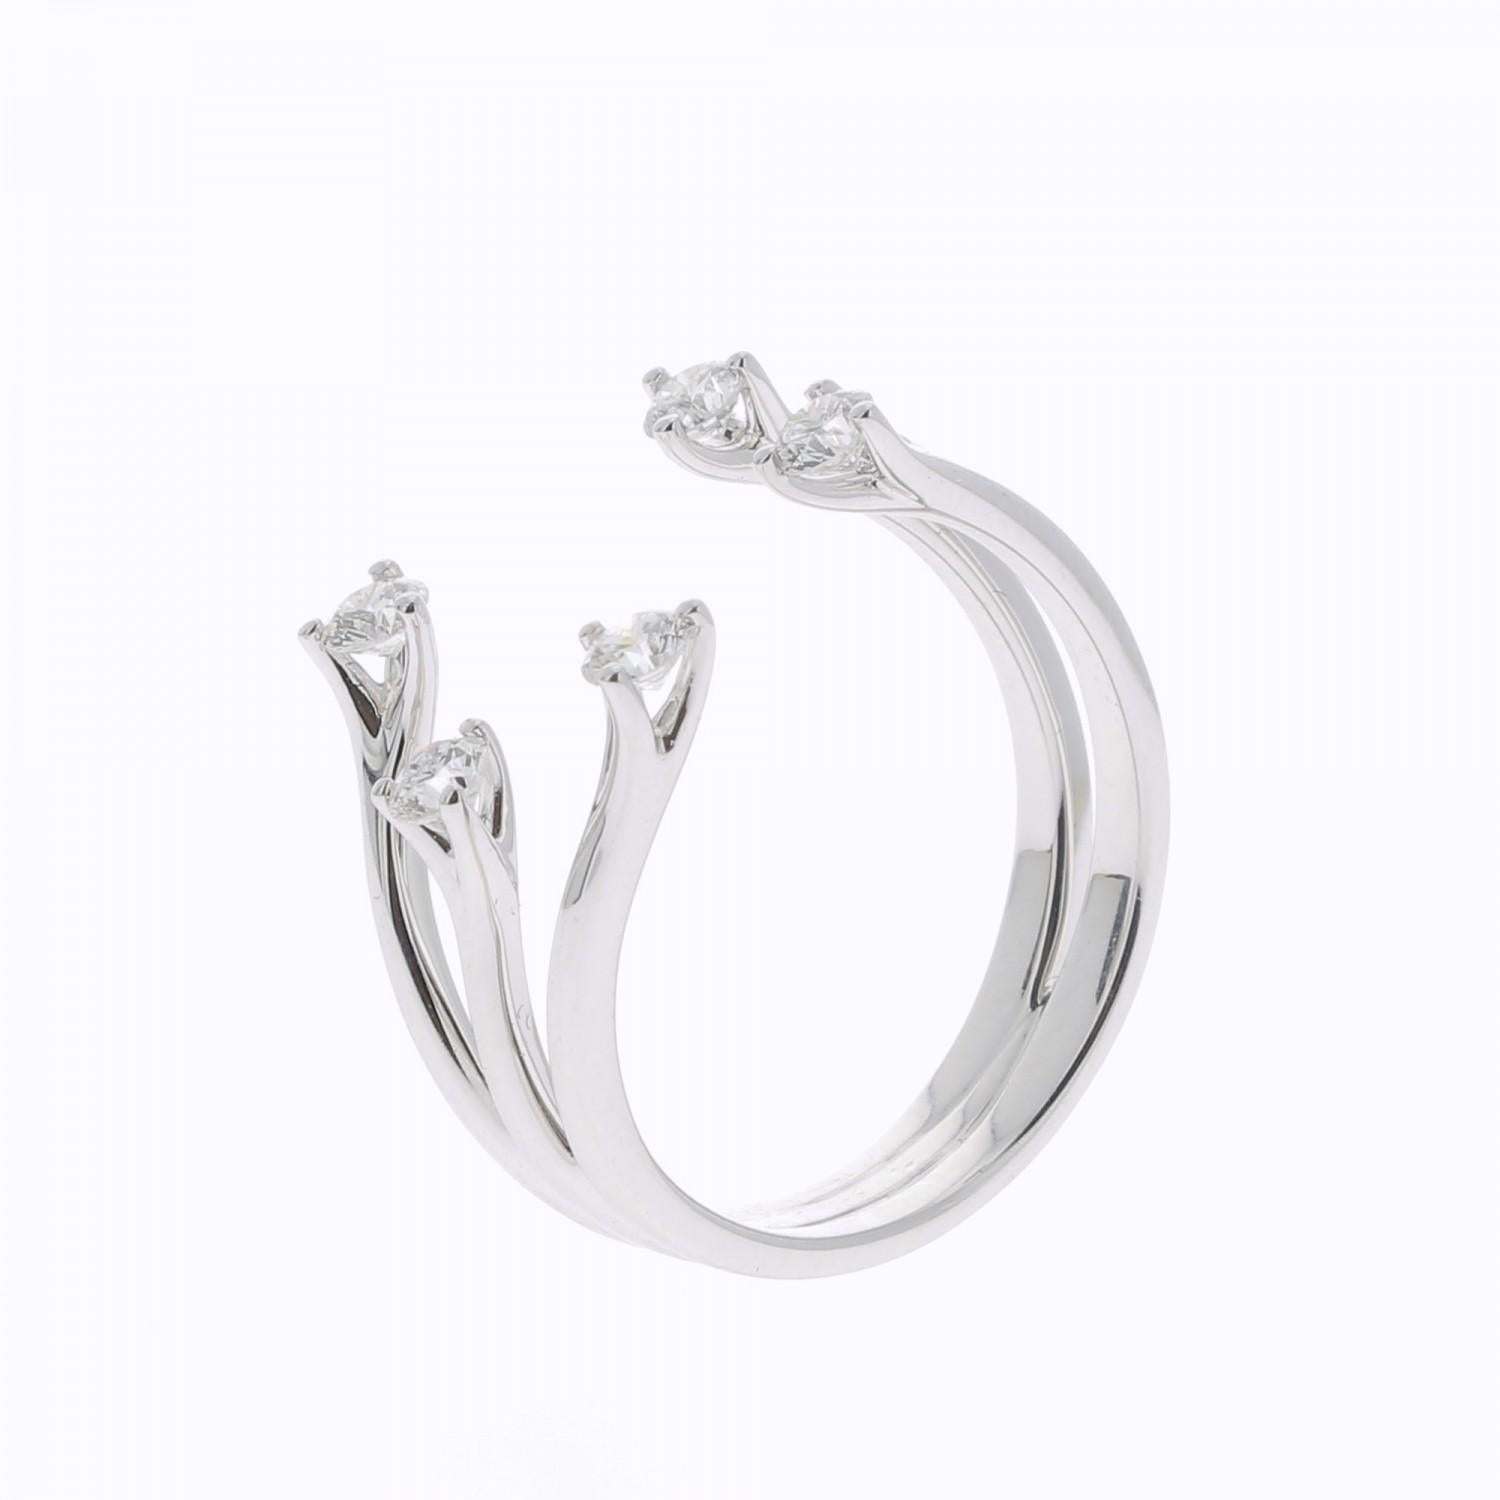 Contemporary 0.48 Carat GVS White Diamond Rings 18 Karat White Gold Fashion Rings